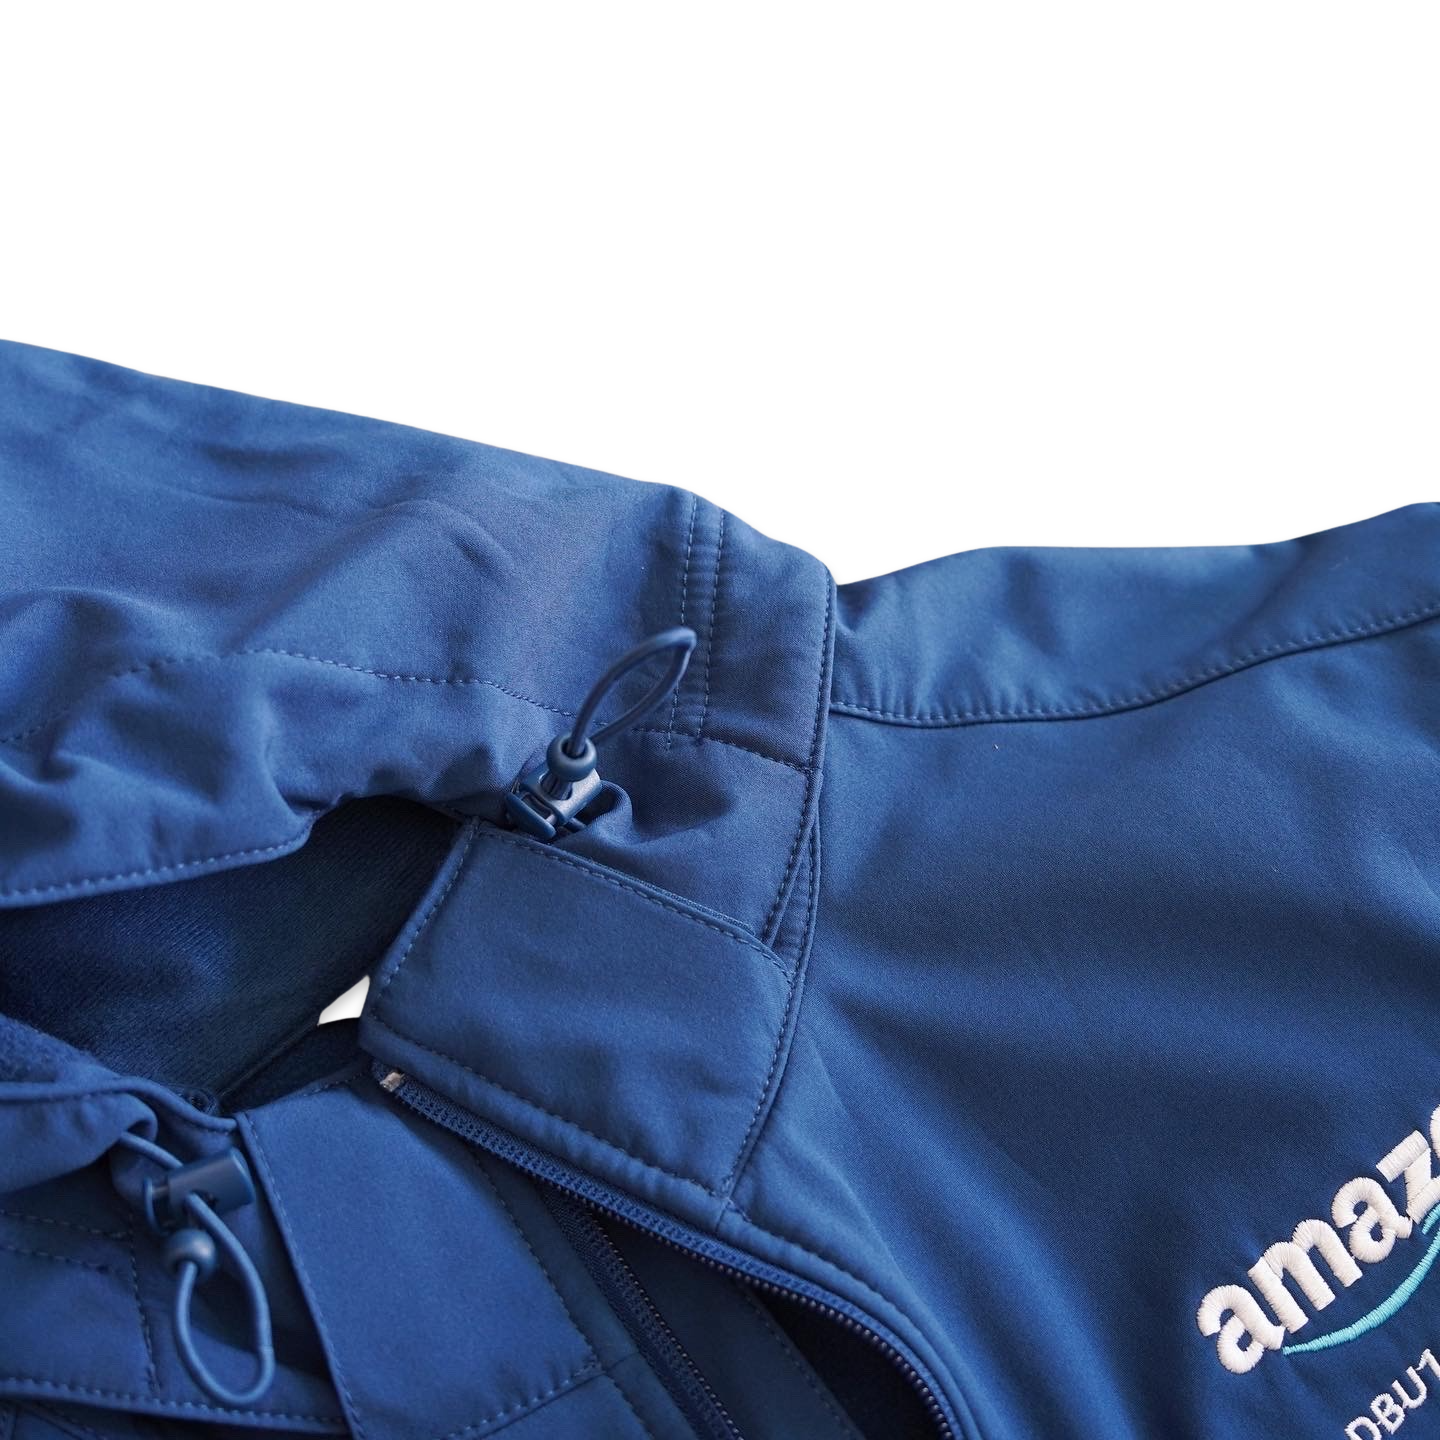 Amazon x Eddie Bauer Fleece Lined Soft Shell Jacket